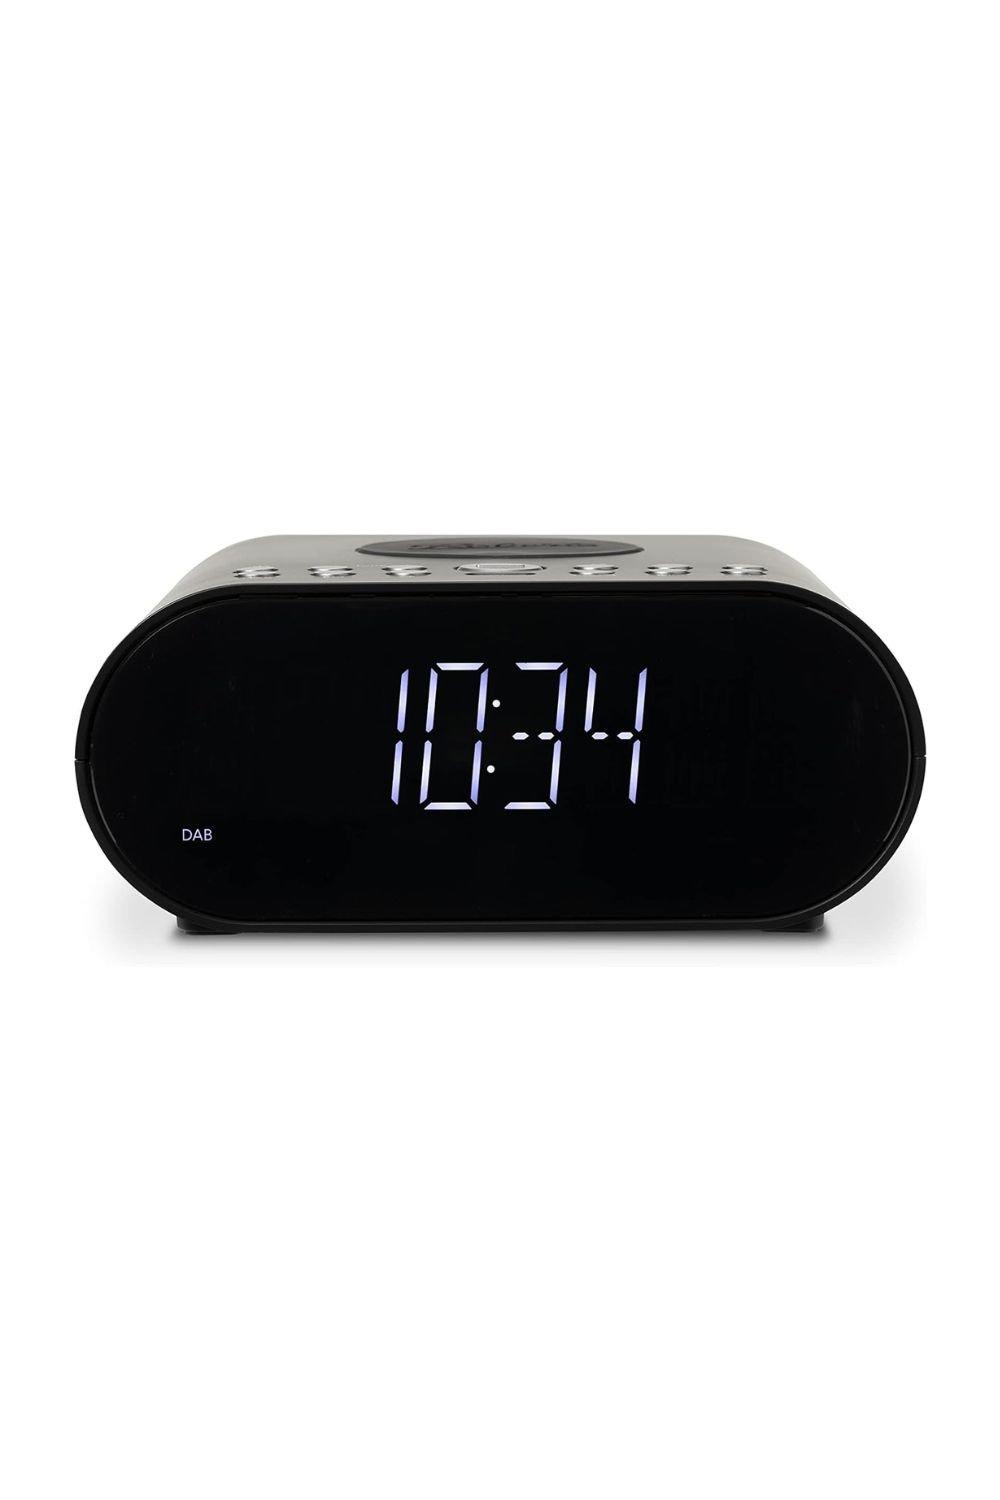 ORTUS CHARGE DAB Alarm Clock Radio with Wireless Smartphone Charging